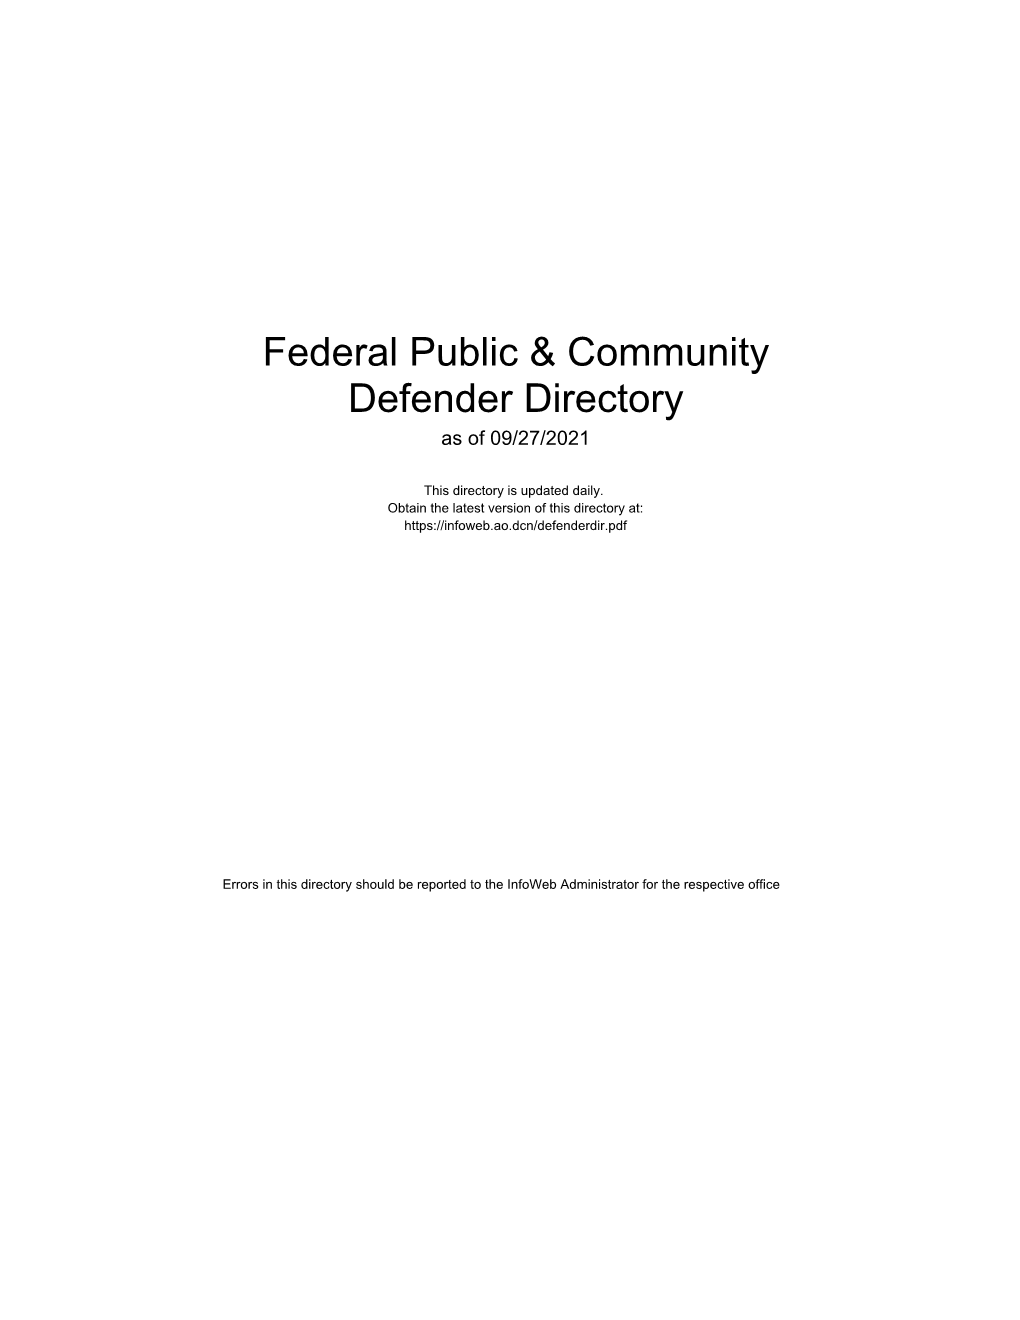 Federal Public & Community Defender Directory